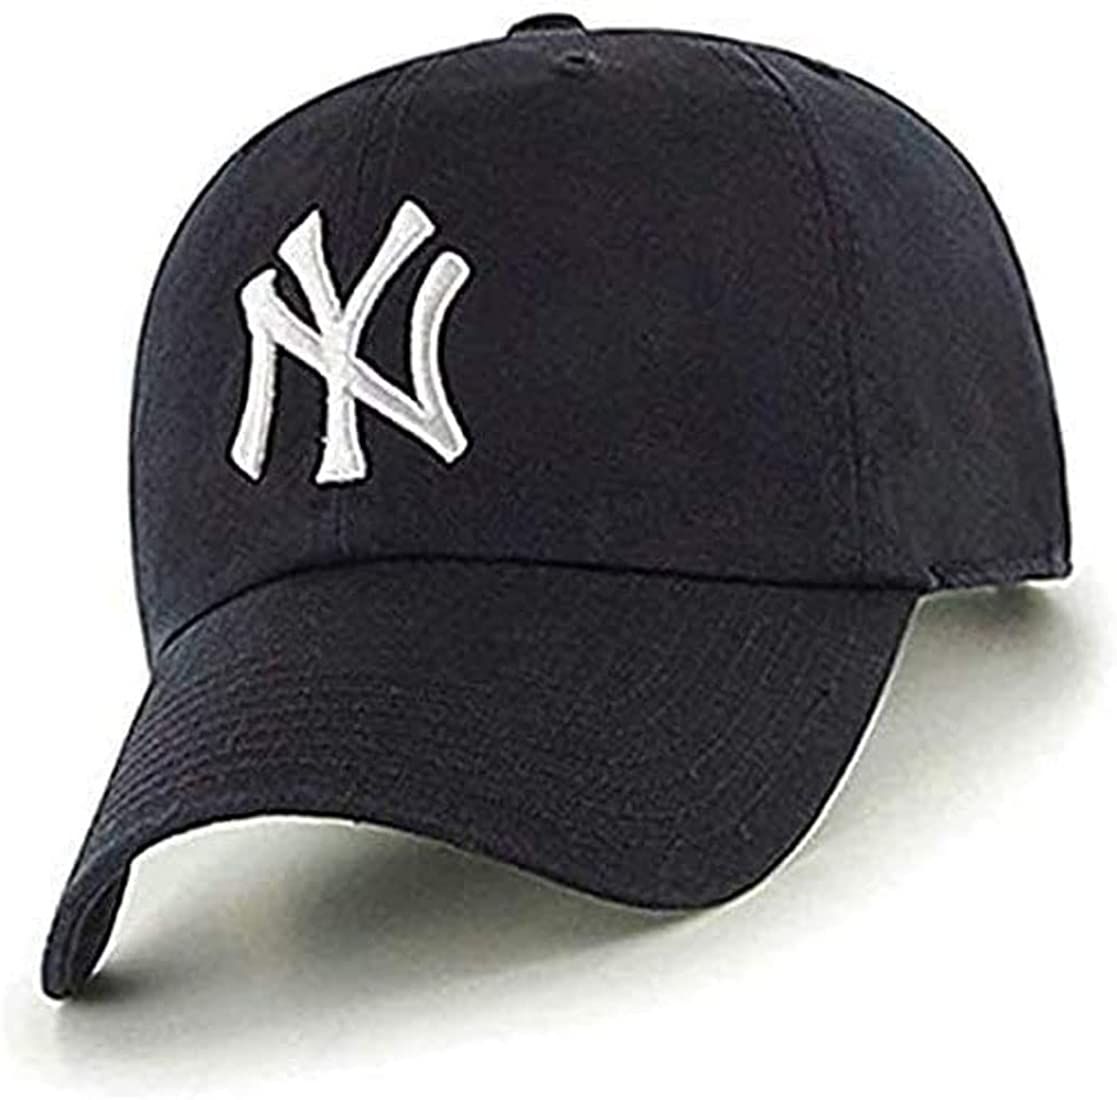 United S Men Women Fashion Adult Adjustable Baseball Cap 100% Cotton Premium Hat Comfort Fit Unis... | Amazon (US)